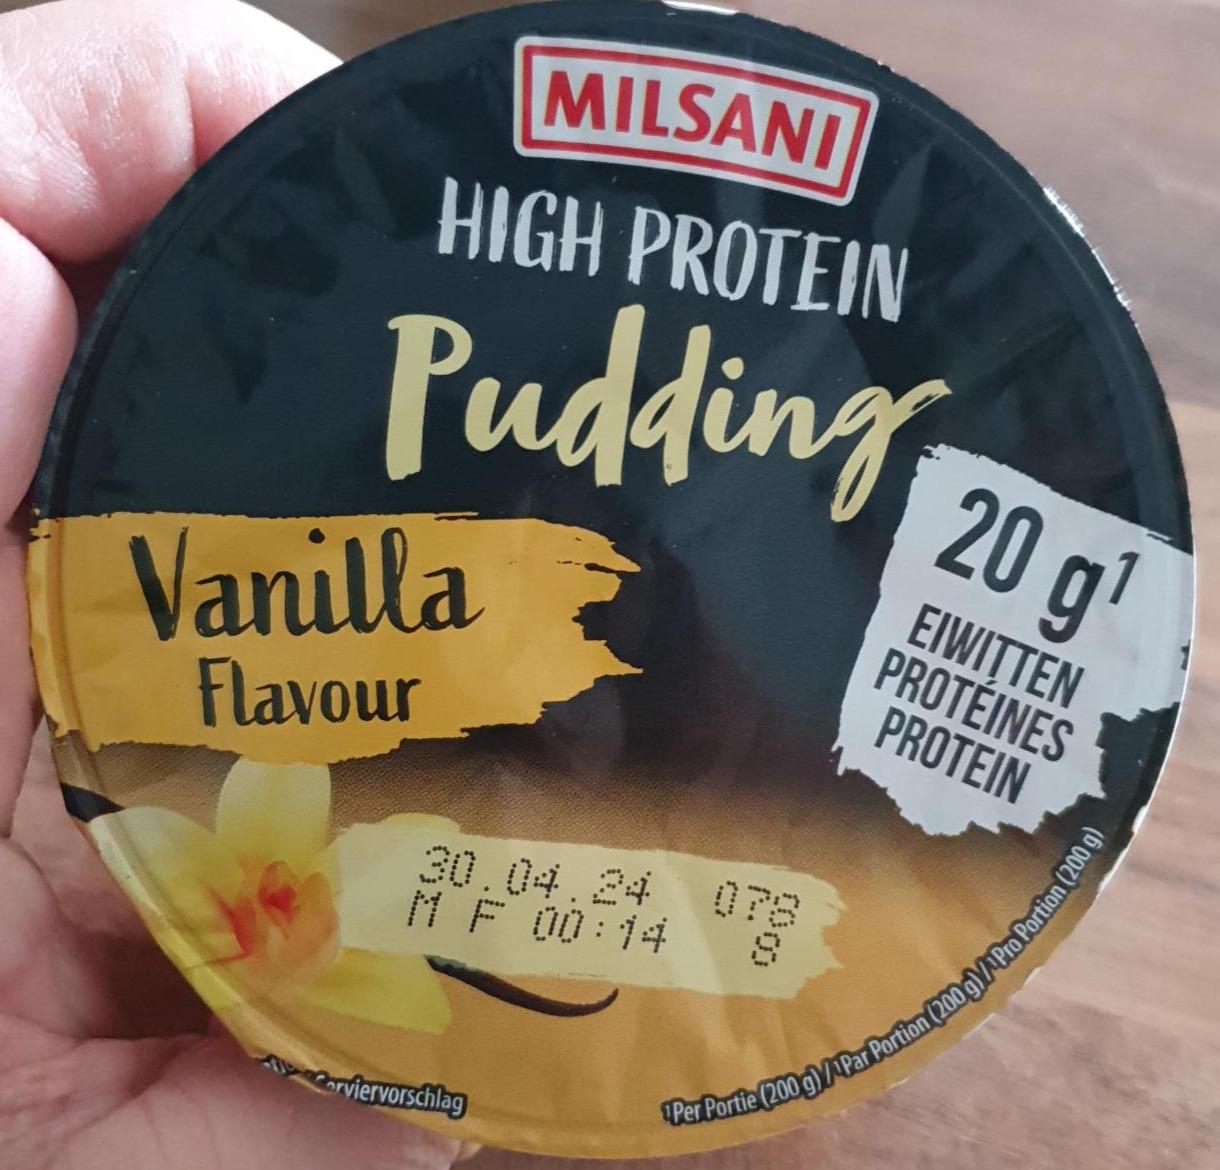 Fotografie - High Protein Pudding Vanilla Flavour Milsani